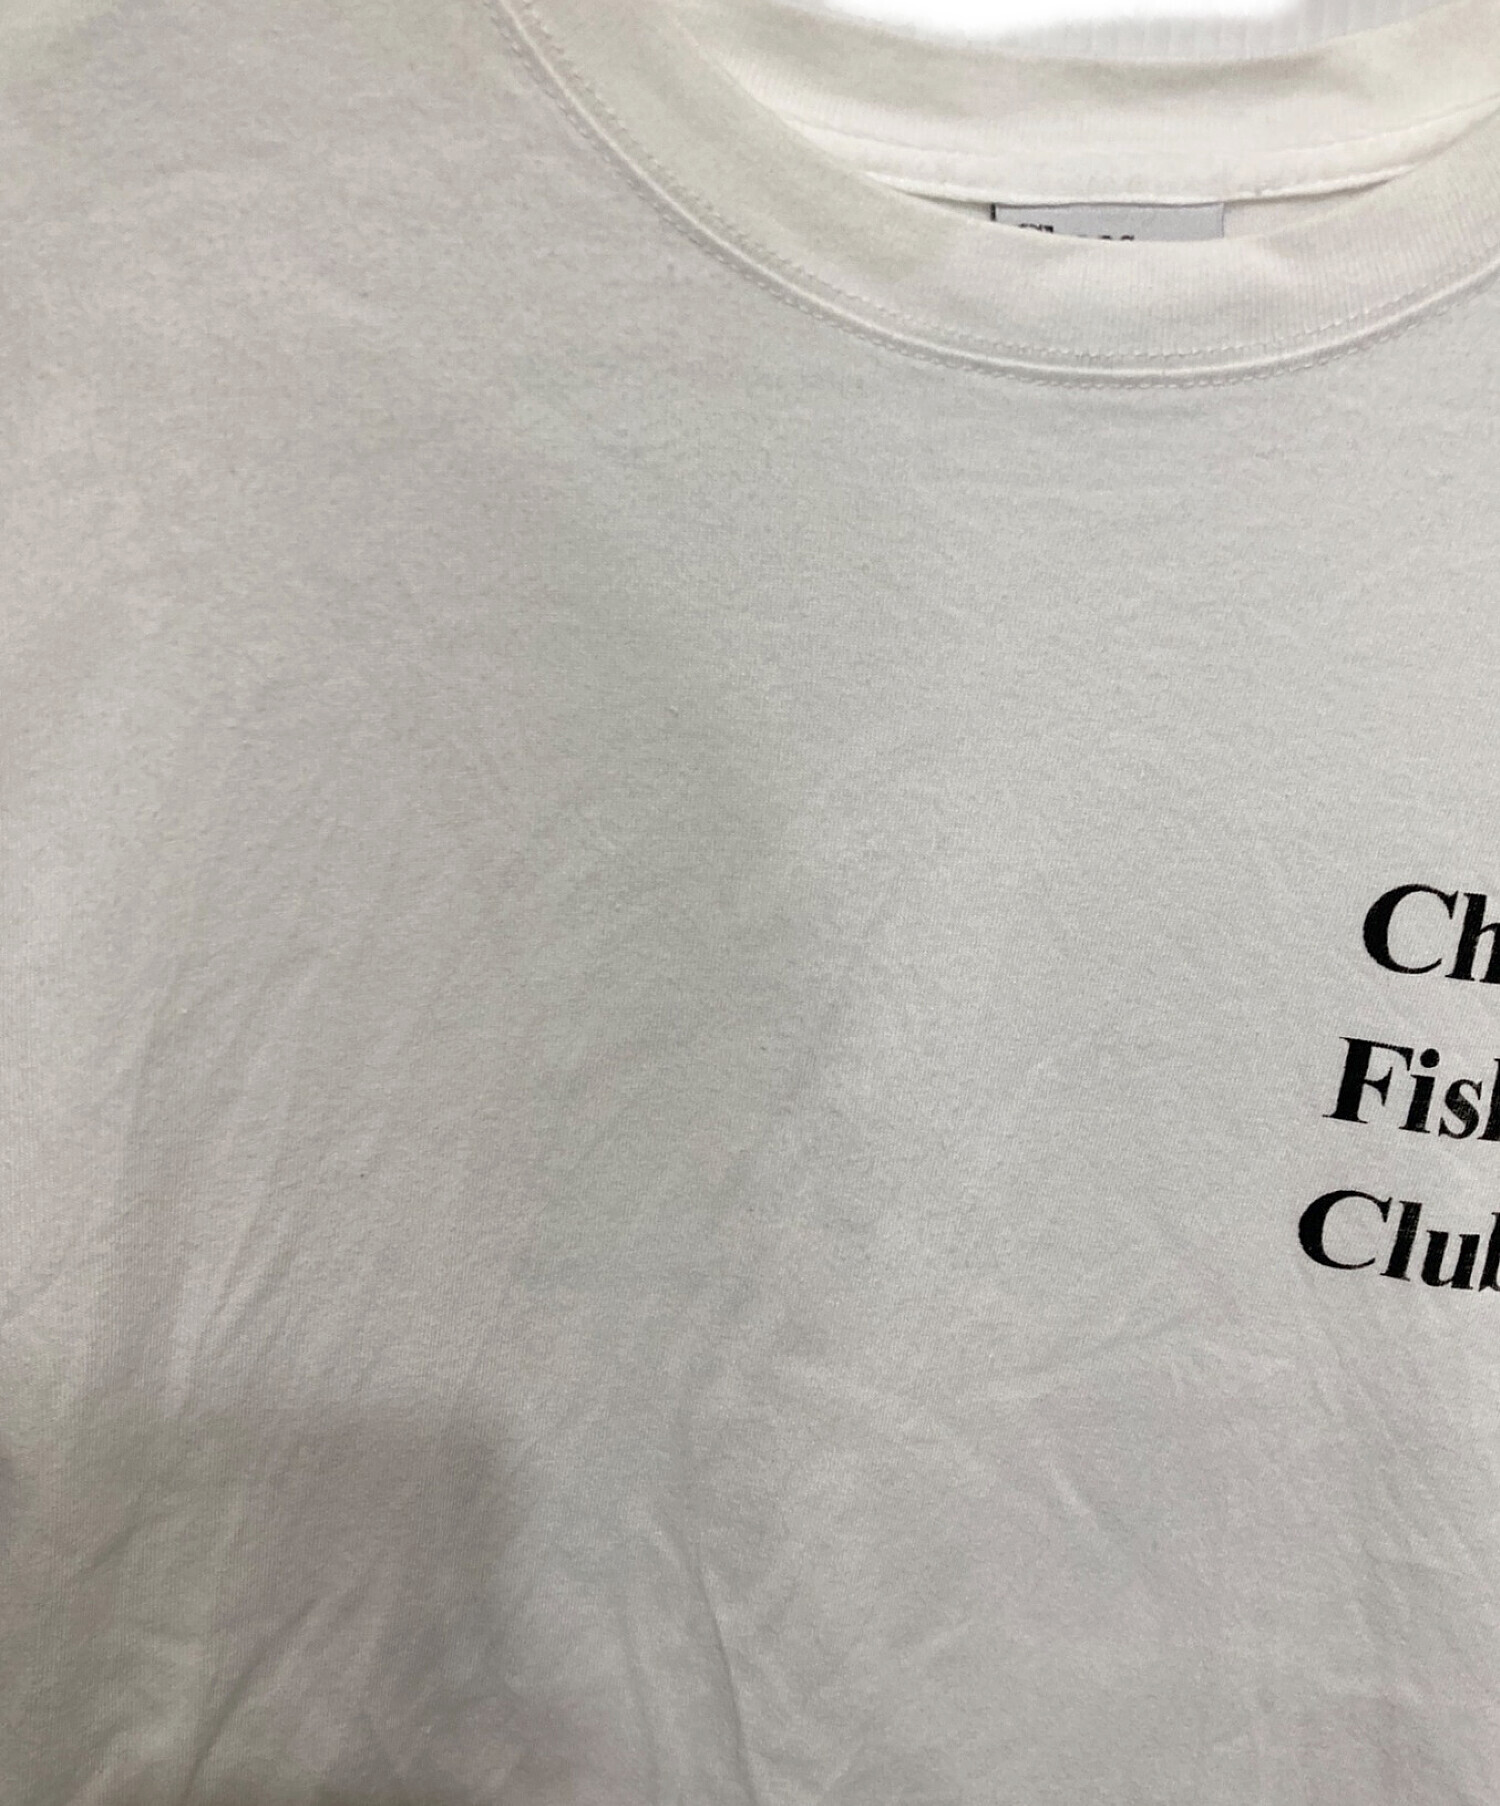 CHAOS FISHING CLUB (カオスフィッシングクラブ) プリントTシャツ ホワイト サイズ:L